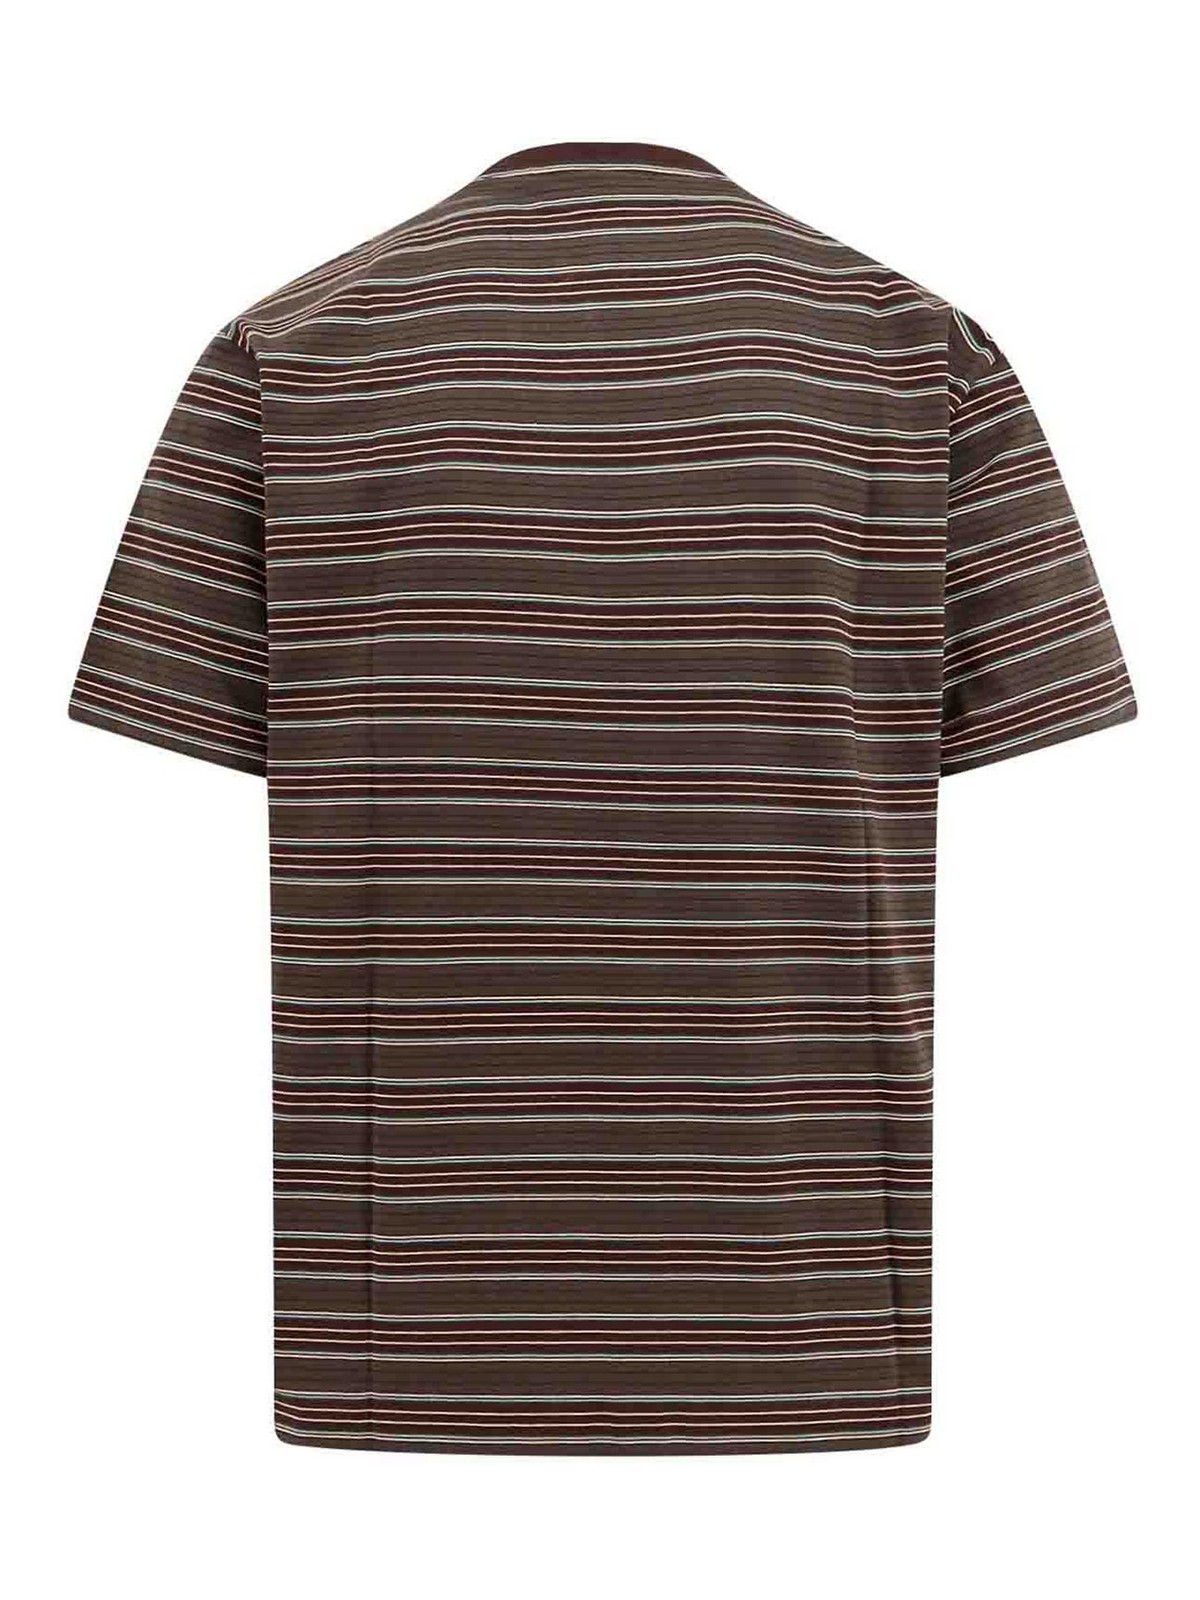 Shop Etudes Studio Biologic Cotton T-shirt With Striped Motif In Brown